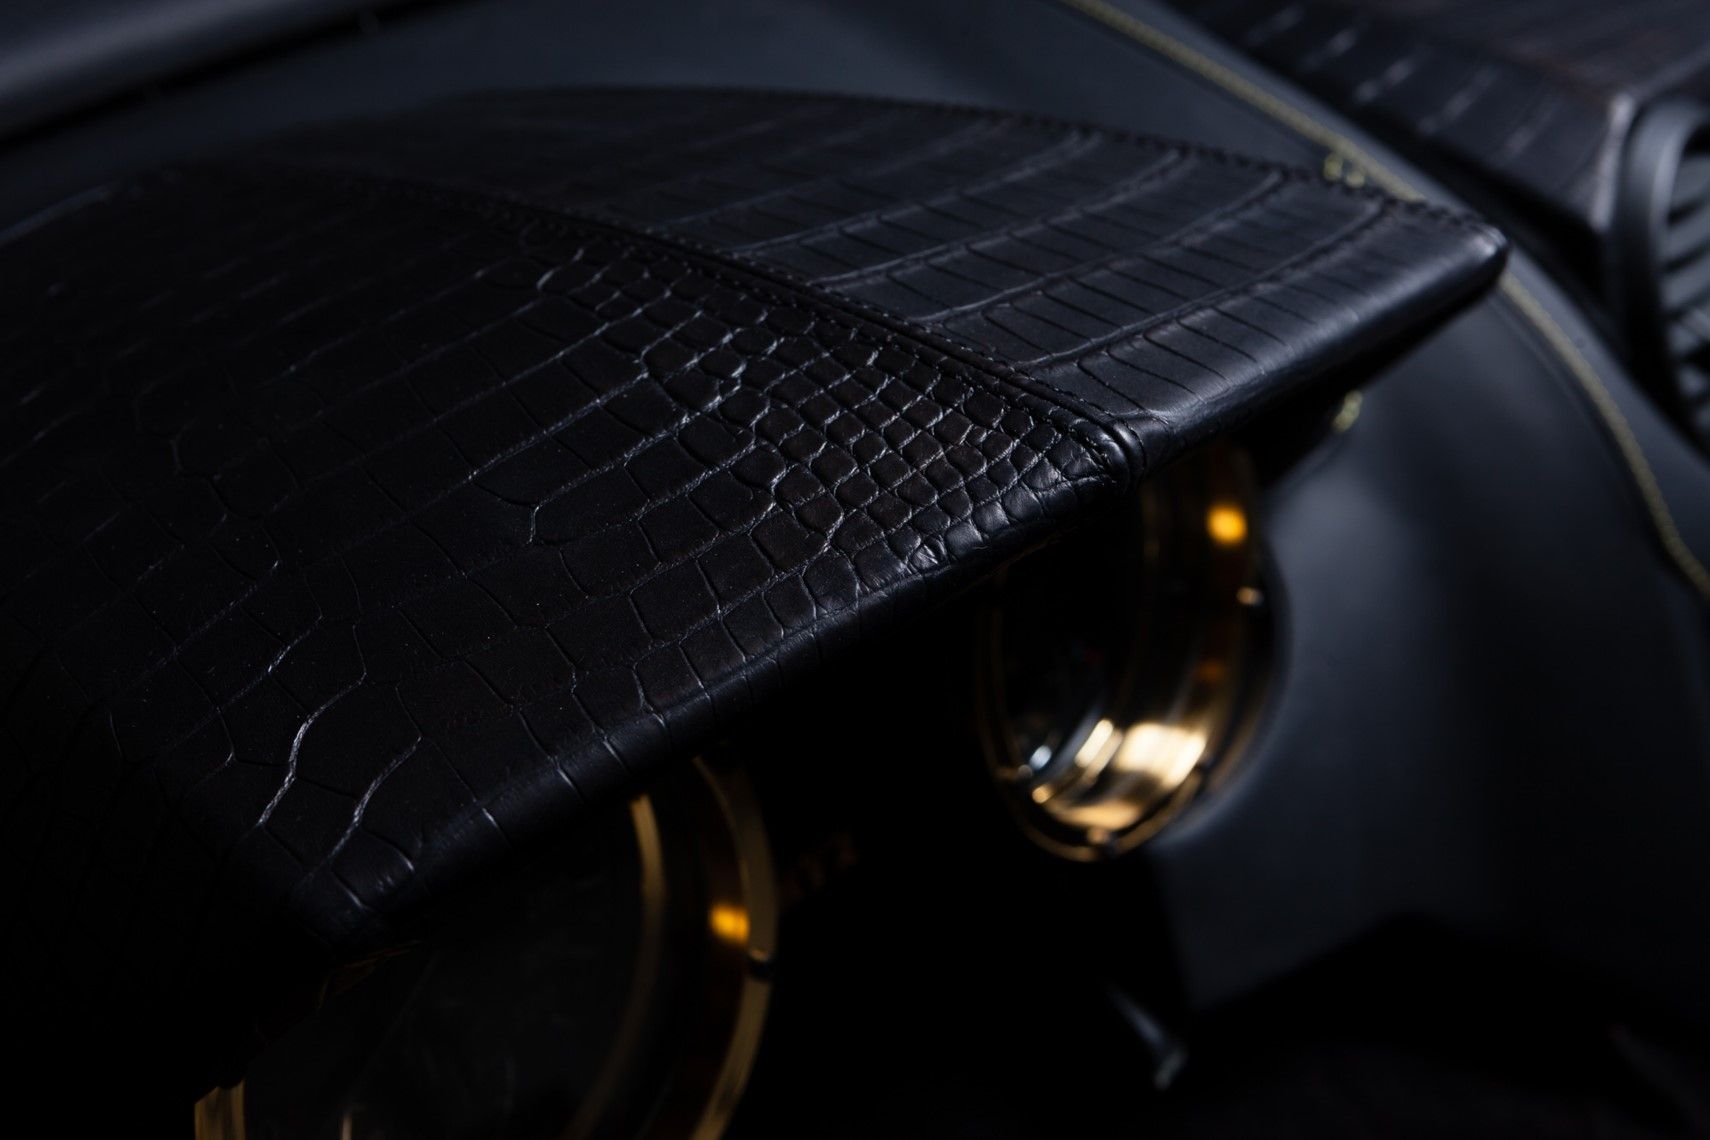 DARTZ Prombron Black Alligator MMXX Black Tiger Edition alligator leather upholstery close-up view